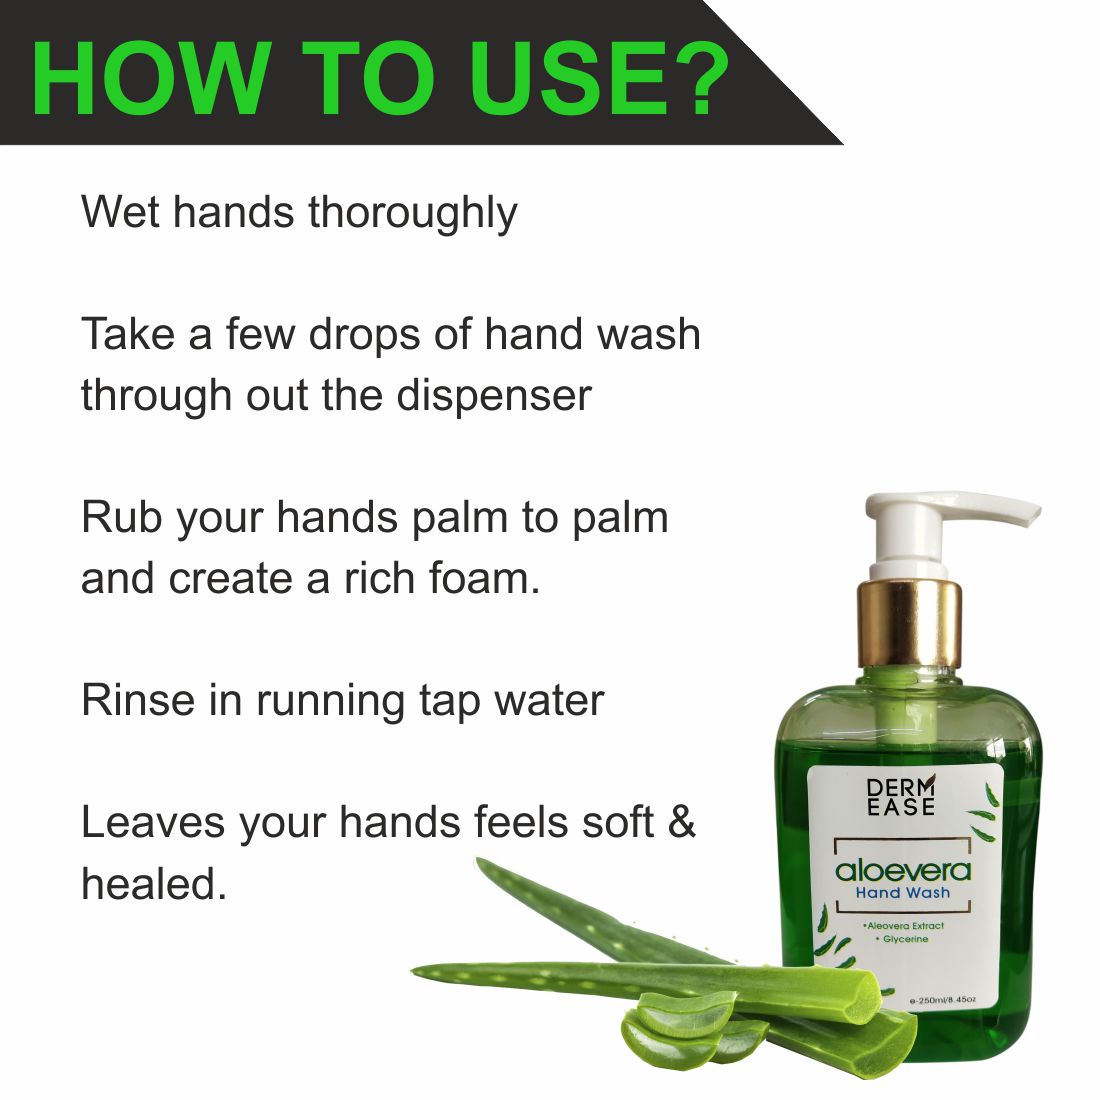 DERM EASE Aloe Vera Hand Wash